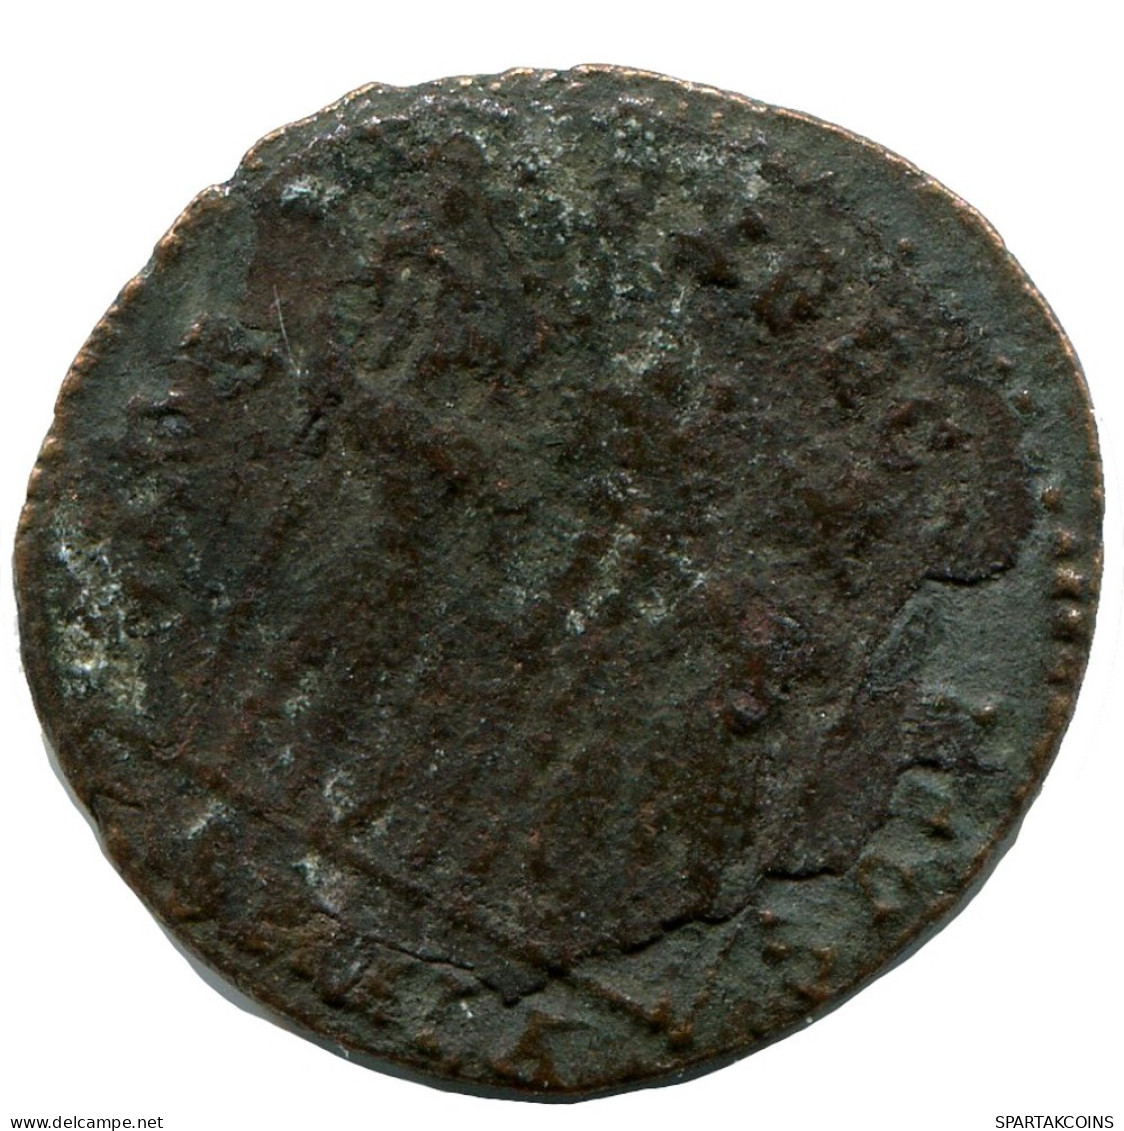 CONSTANTIUS II ALEKSANDRIA FROM THE ROYAL ONTARIO MUSEUM #ANC10456.14.F.A - Der Christlischen Kaiser (307 / 363)